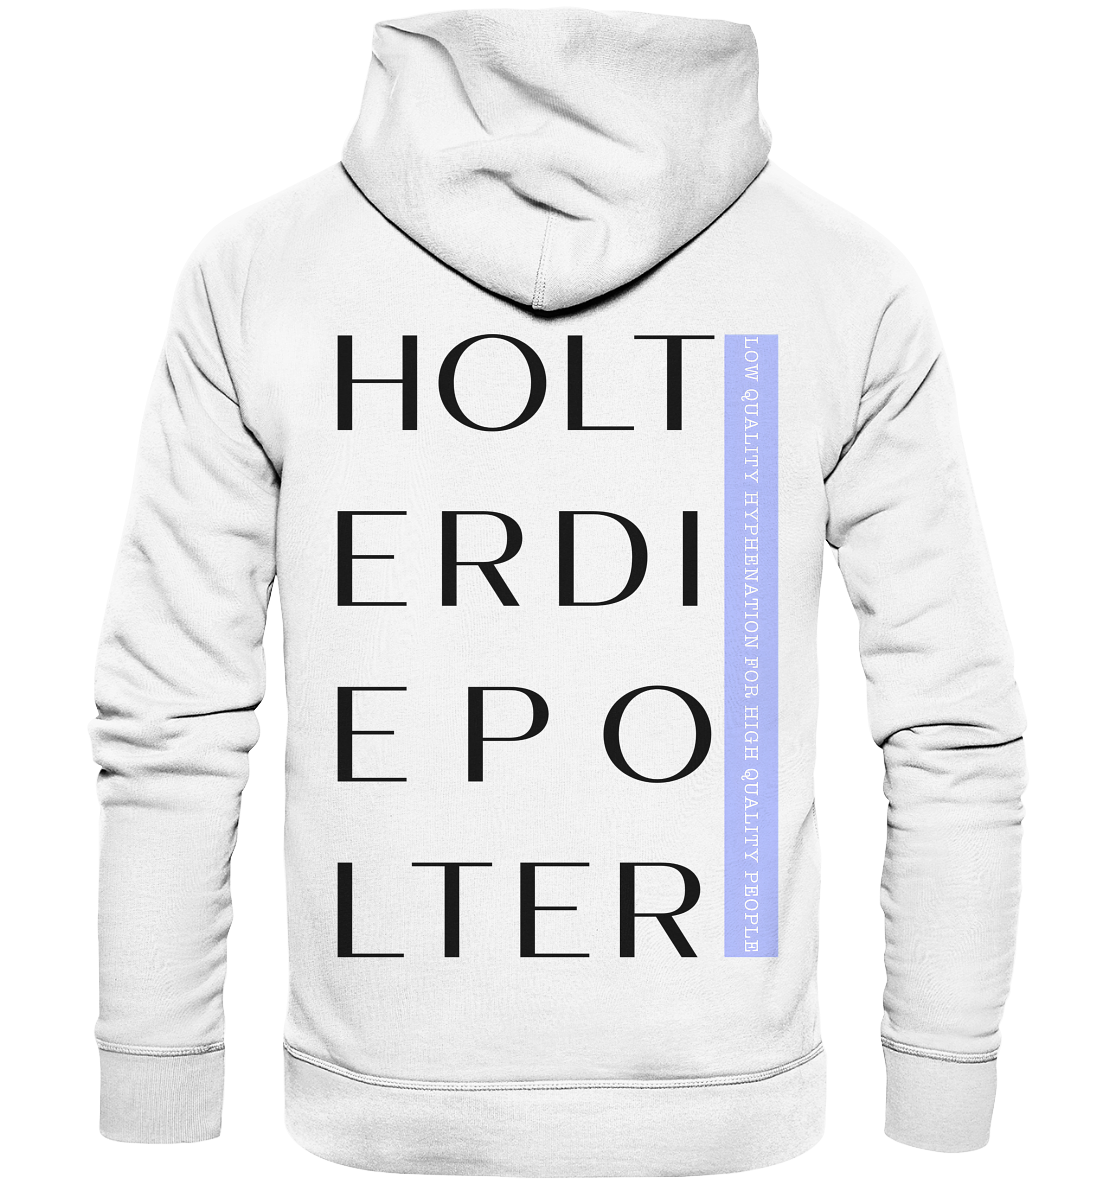 HOLTERDIEPOLTER (LQHFHQP) - Organic Fashion Hoodie